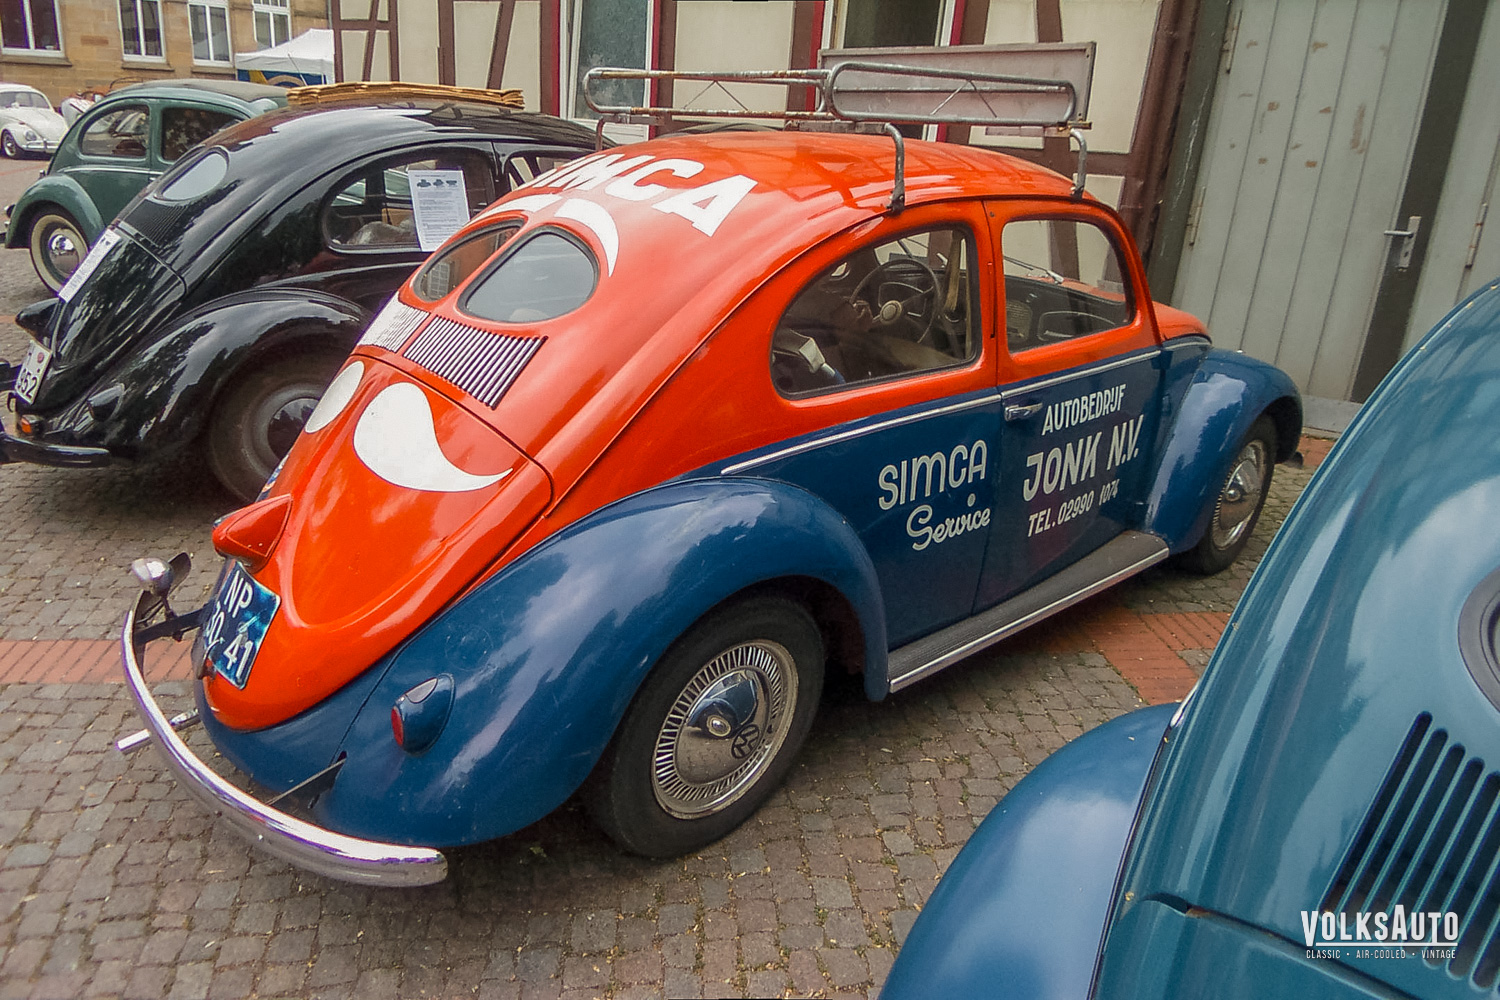 Simca Service Split Beetle at Hessisch-Oldendorf 2005